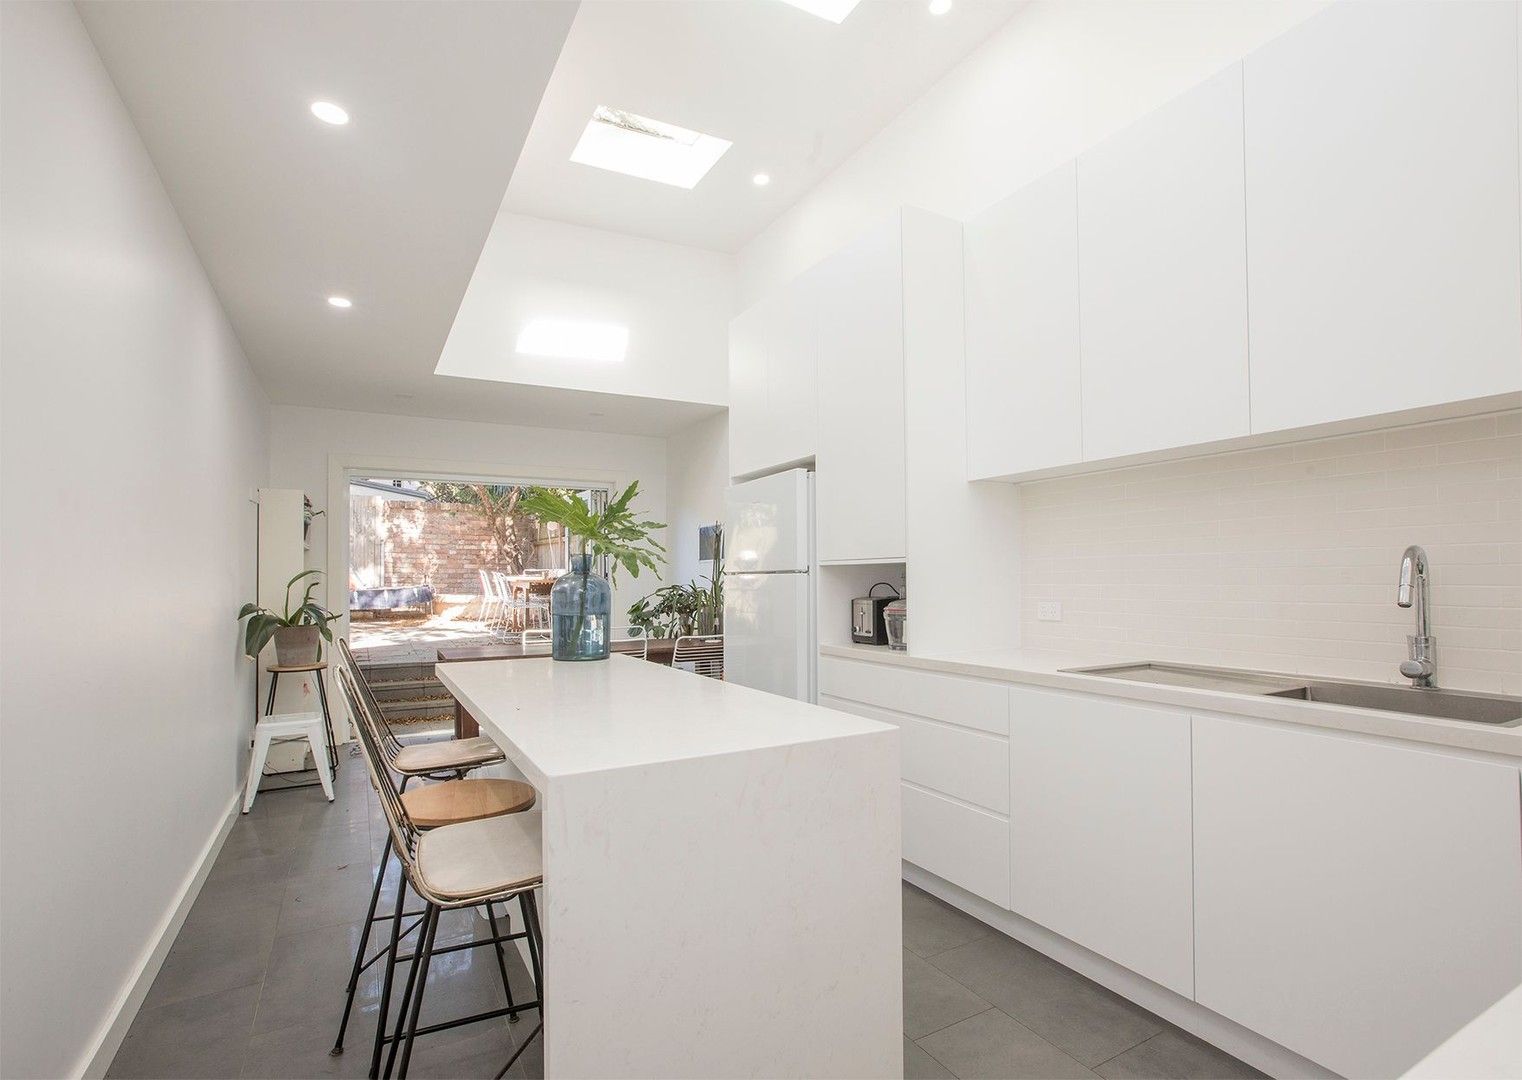 2 bedrooms House in 15 William Street REDFERN NSW, 2016